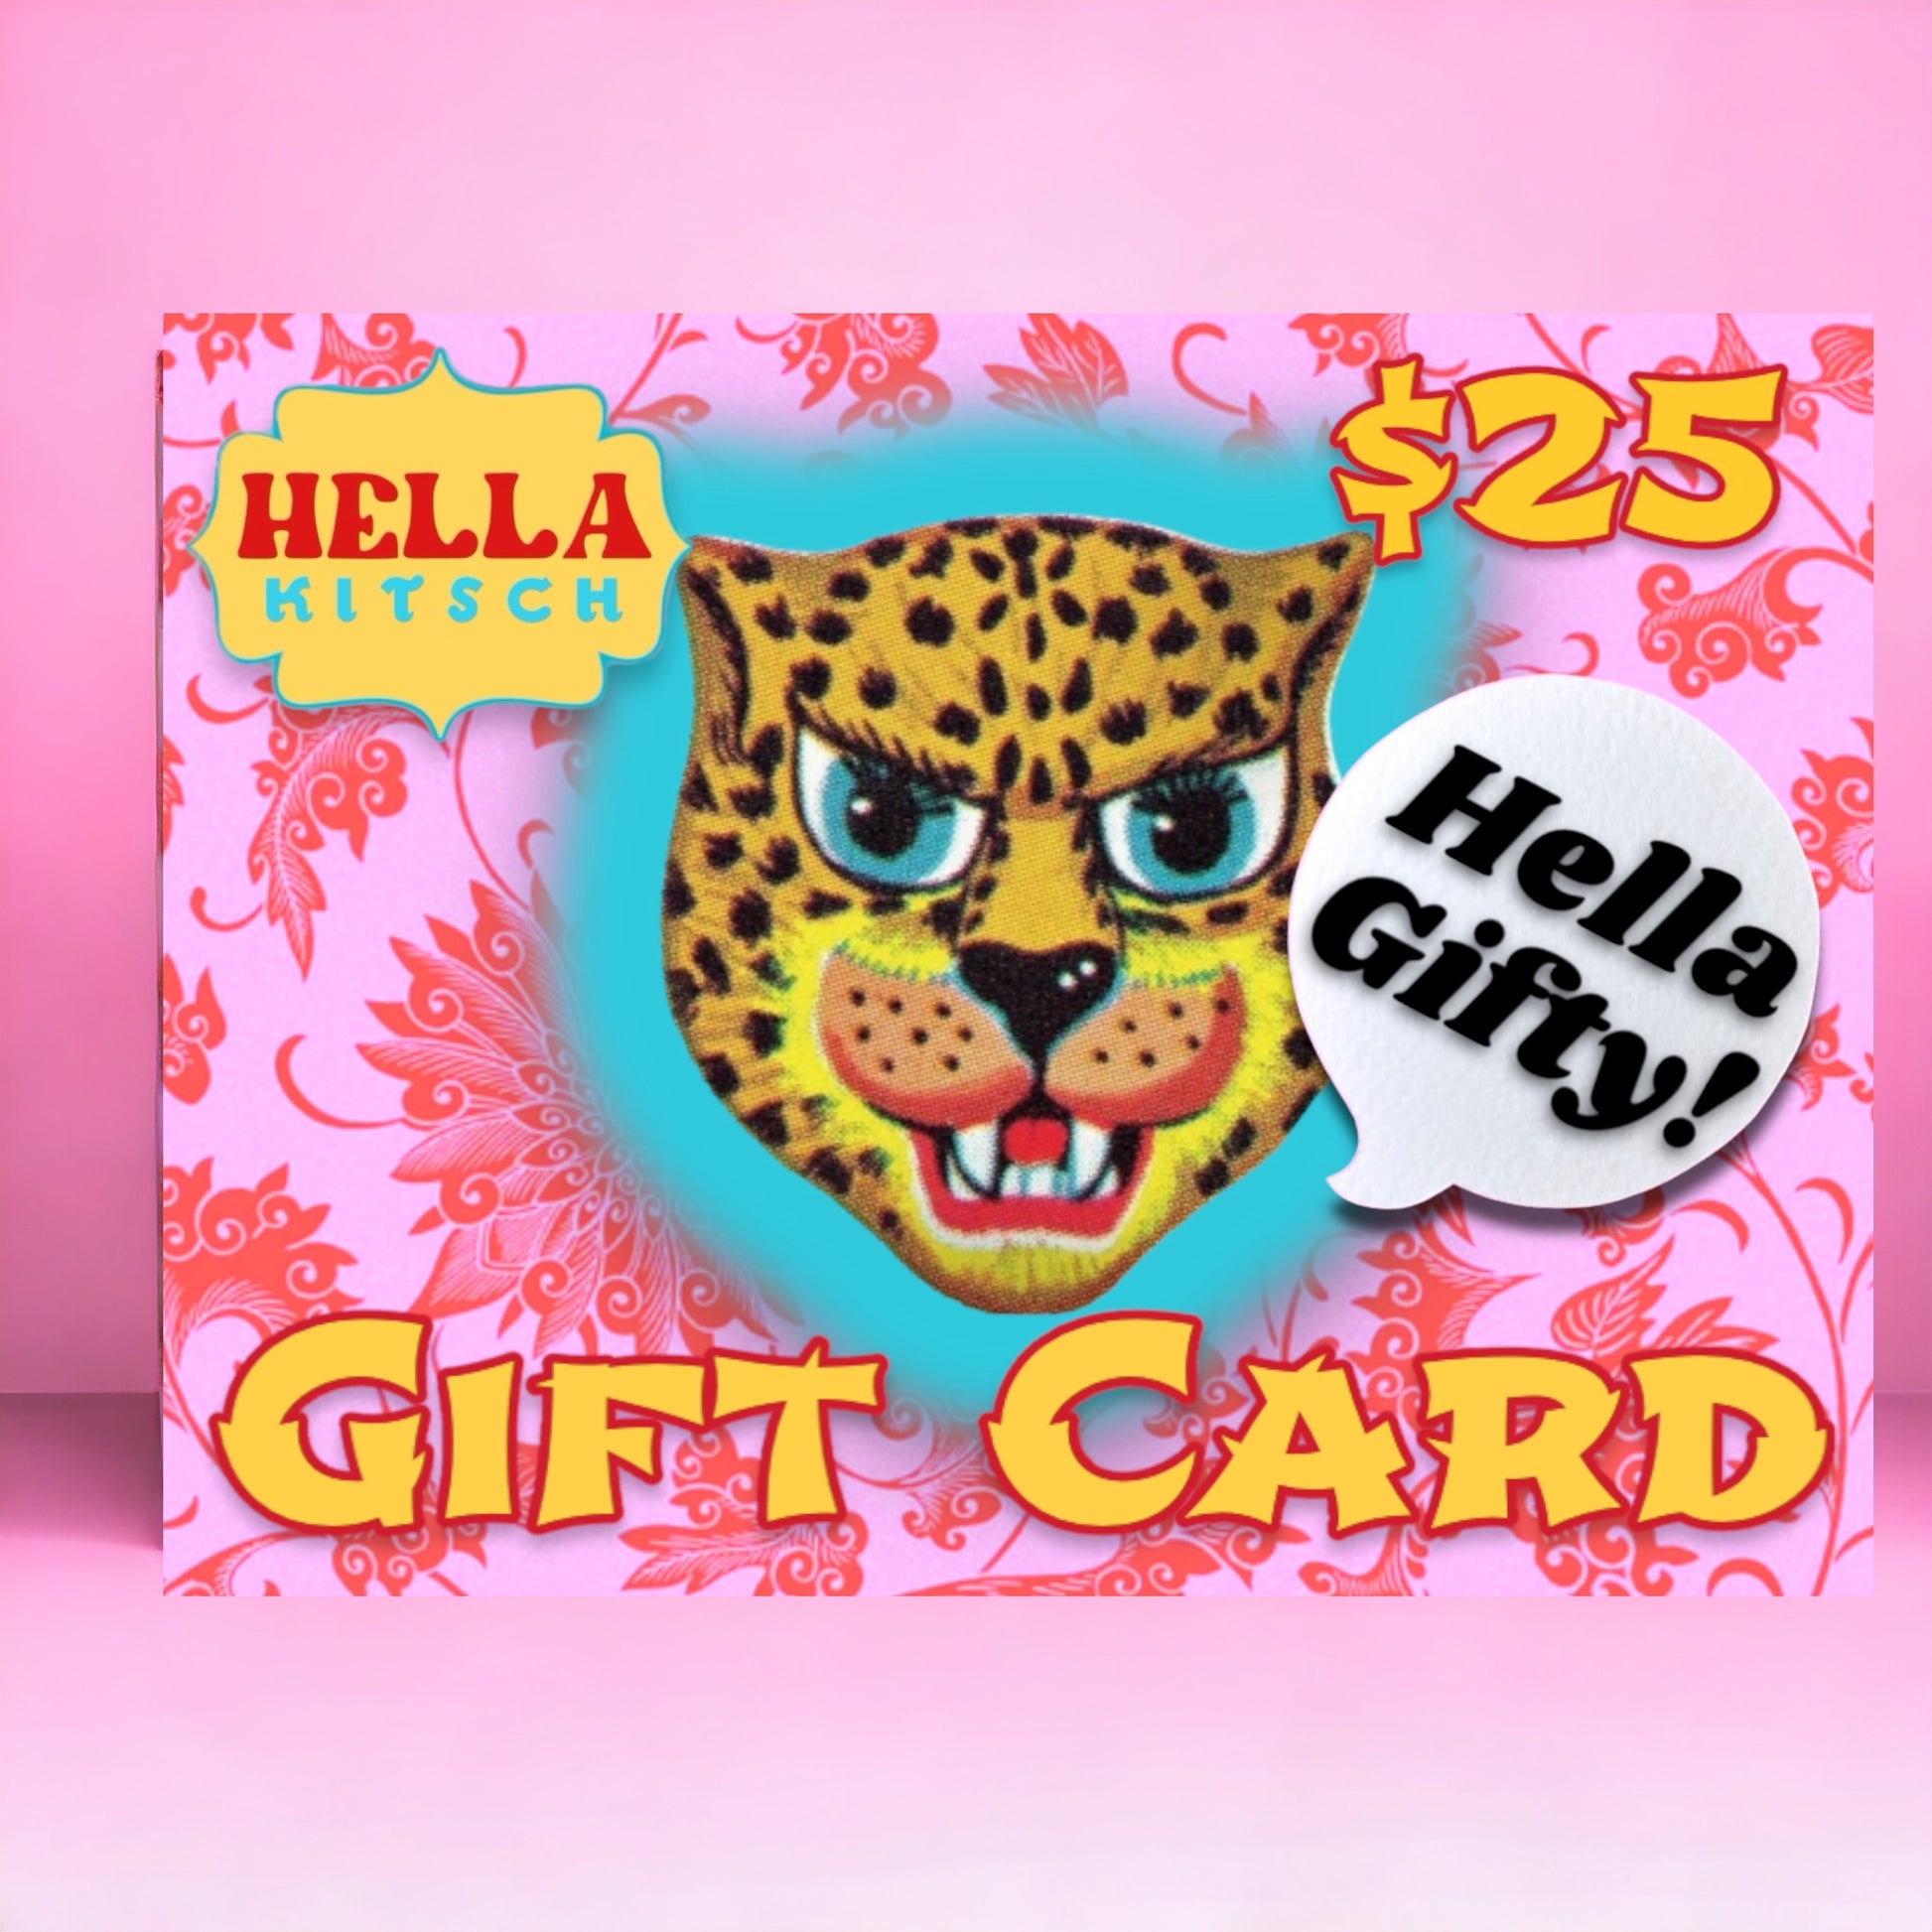 Hella Gifty - Gift Card! - Hella Kitsch